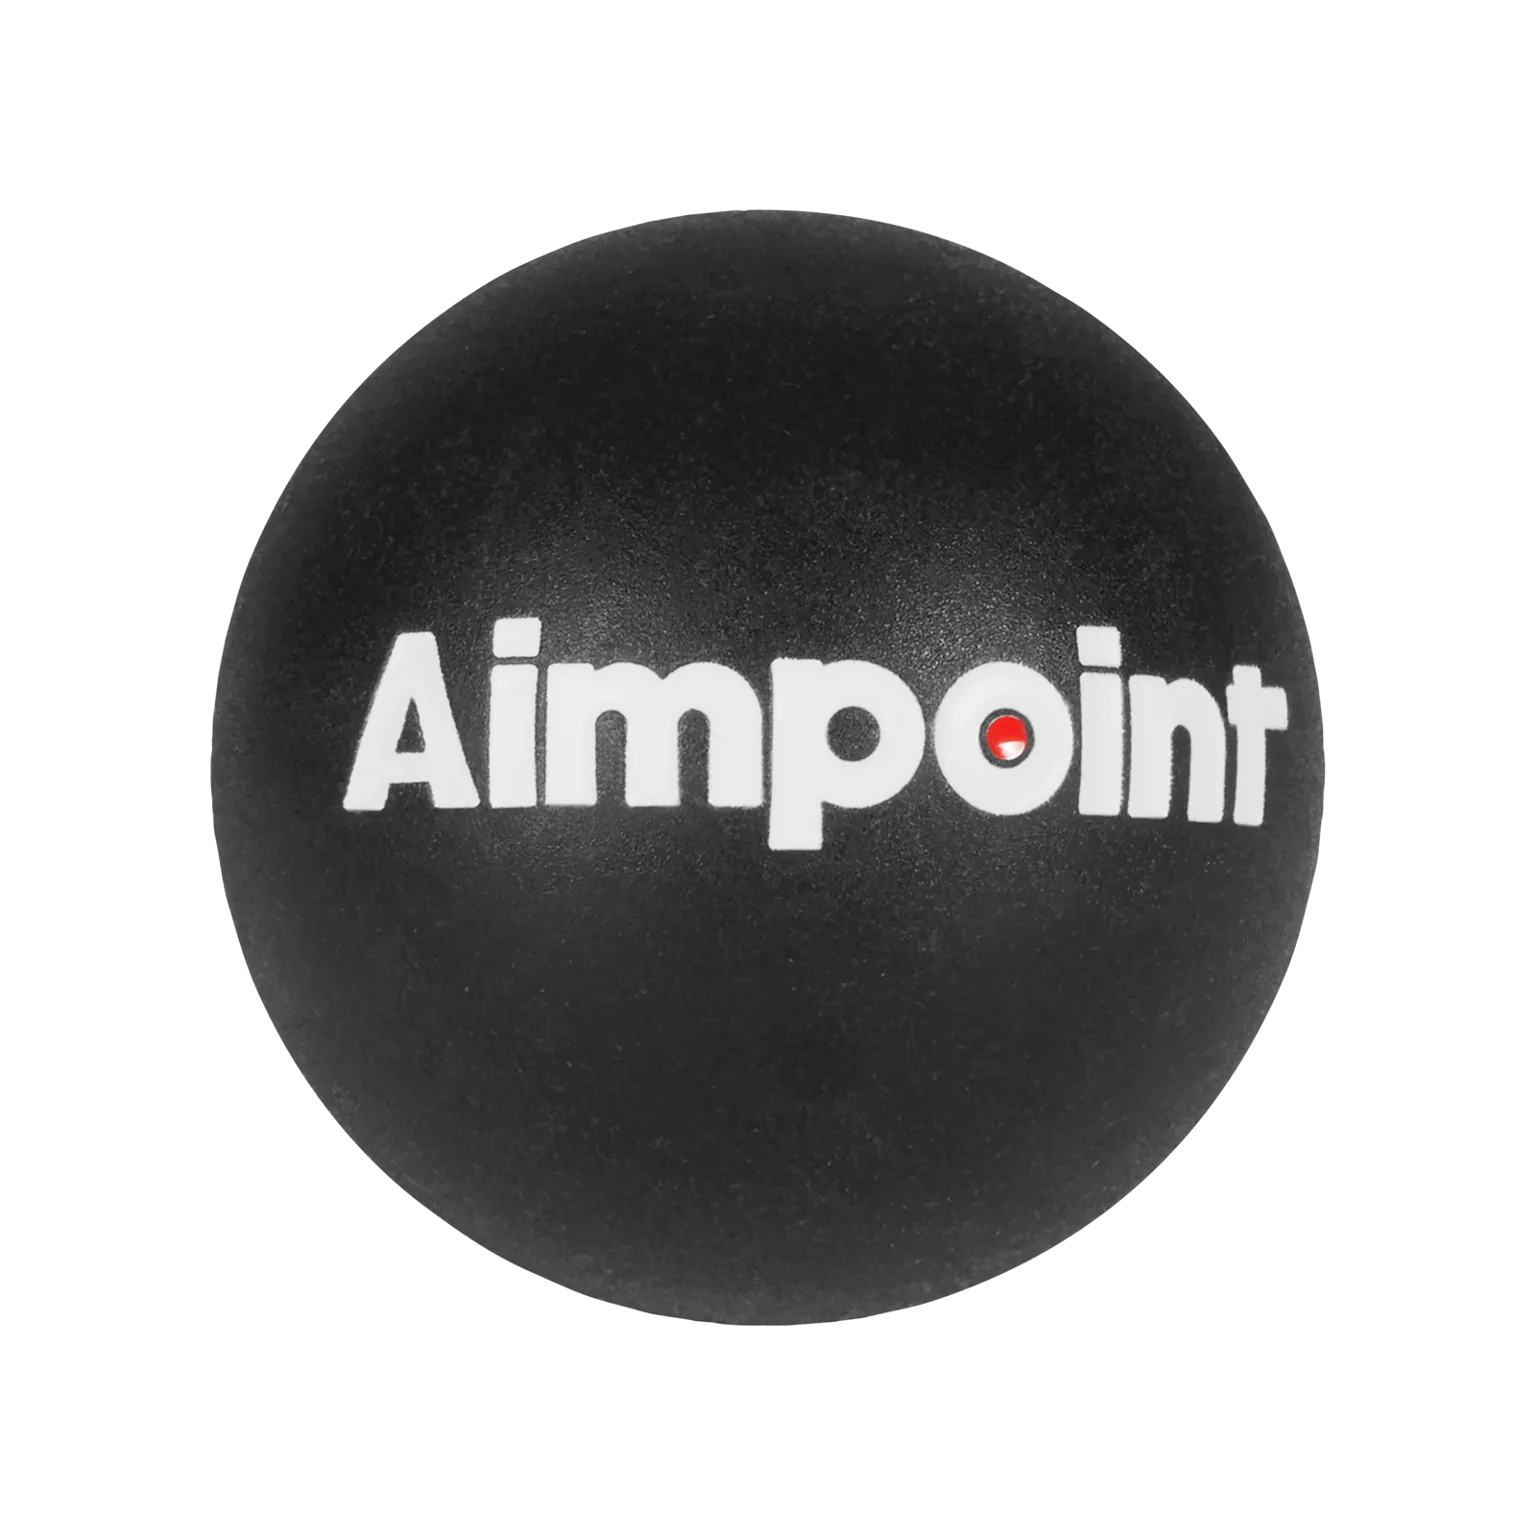 Aimpoint® Bolt knob - Black rubber   - 1